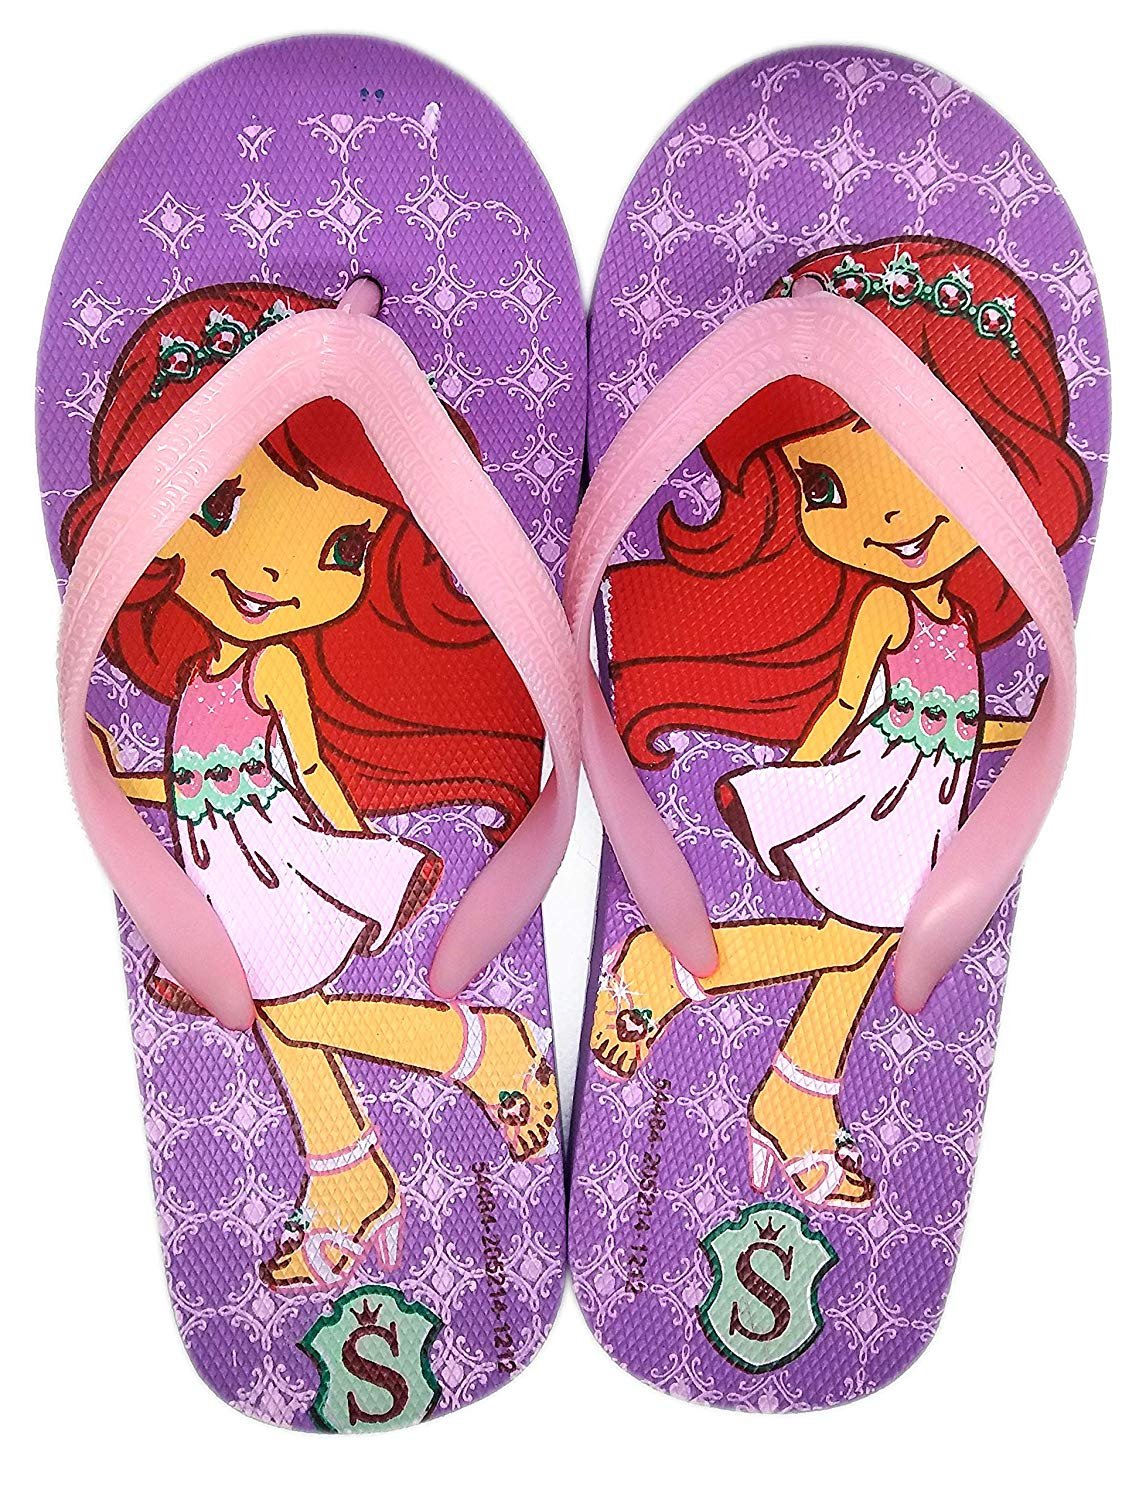 Strawberry Shortcake Flip Flops Sandals - Size 1-2 - Variation 2